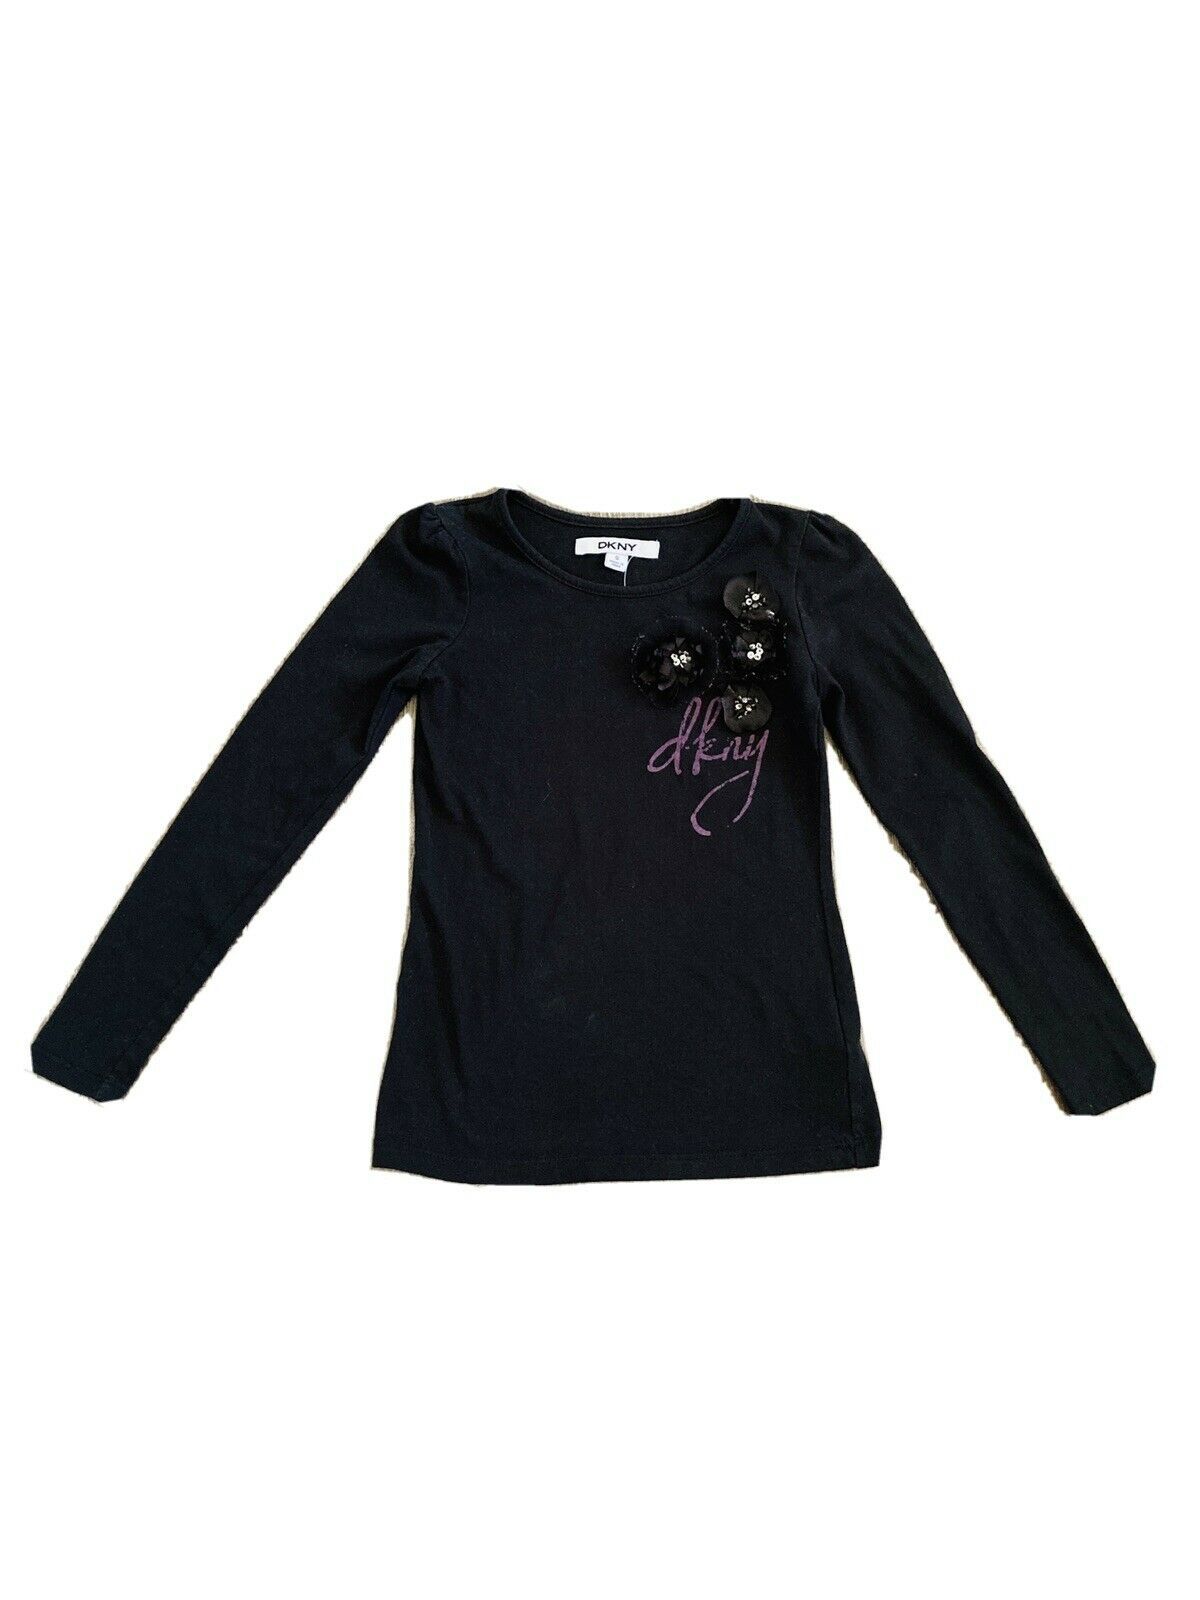 DKNY long sleeve Shirt Size S for girl - $10.99